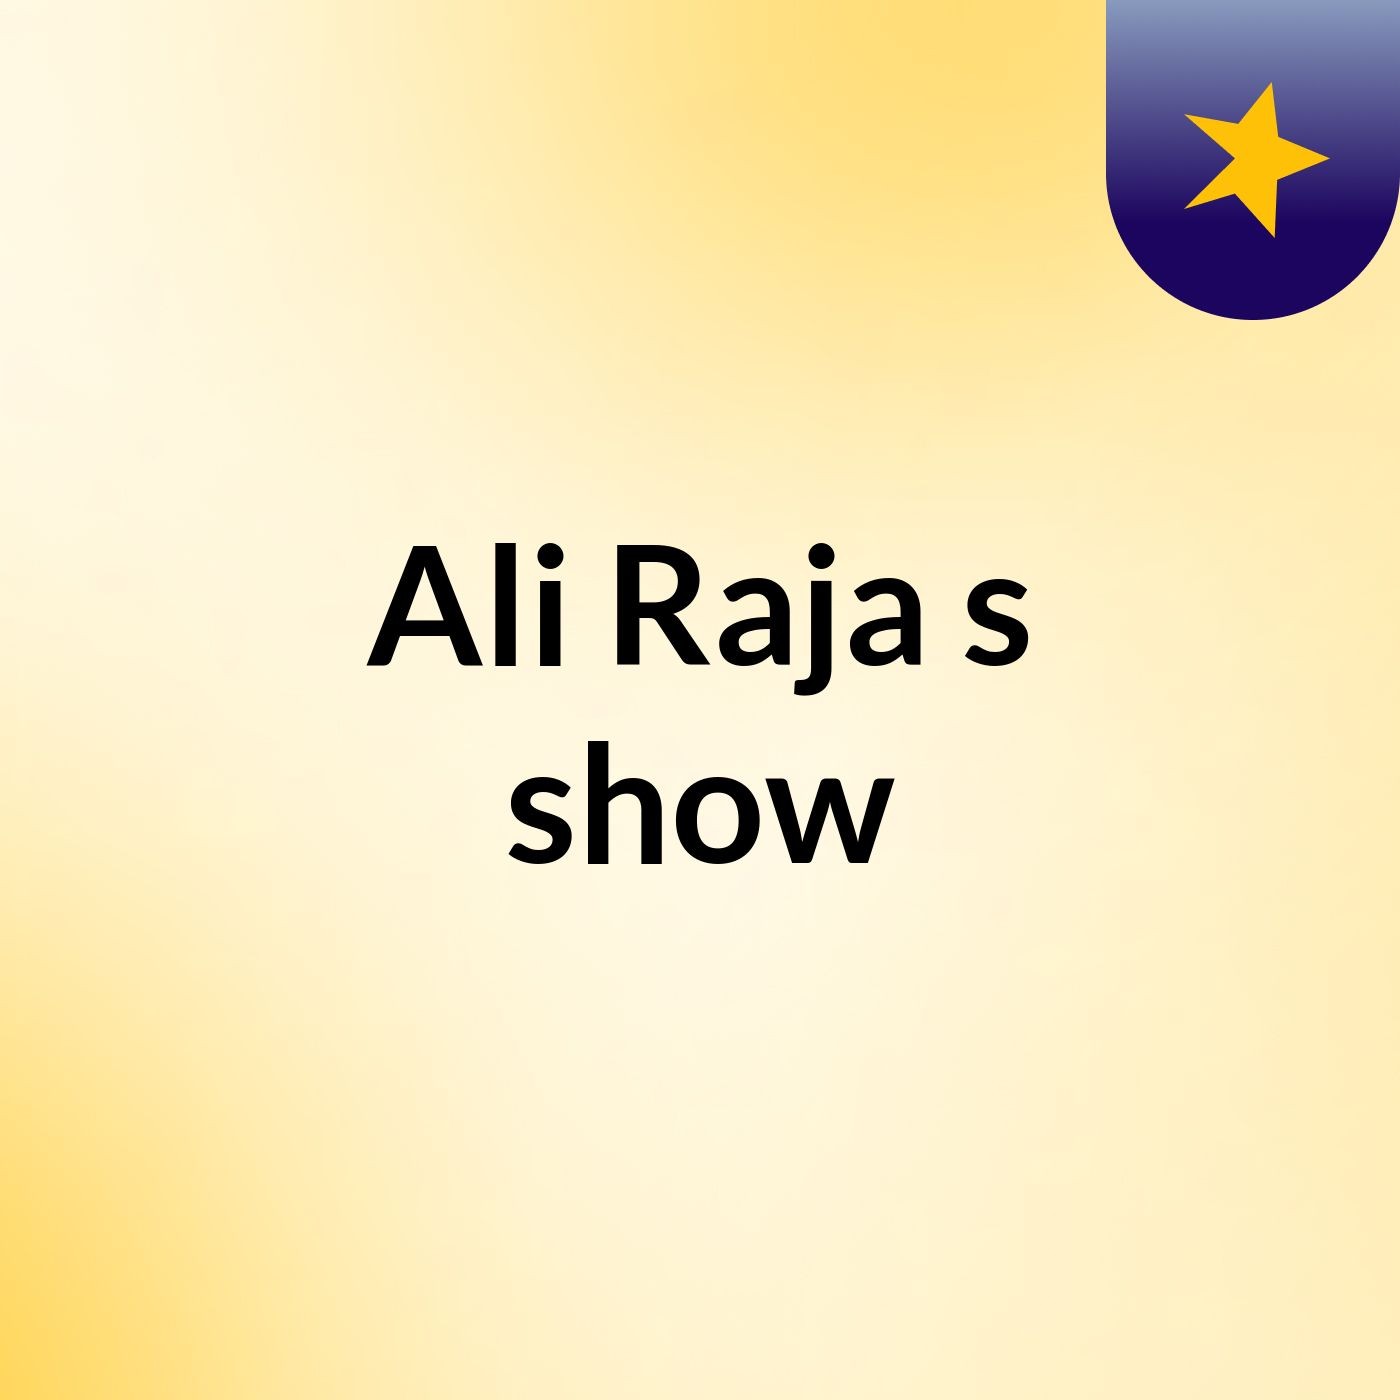 Ali Raja's show